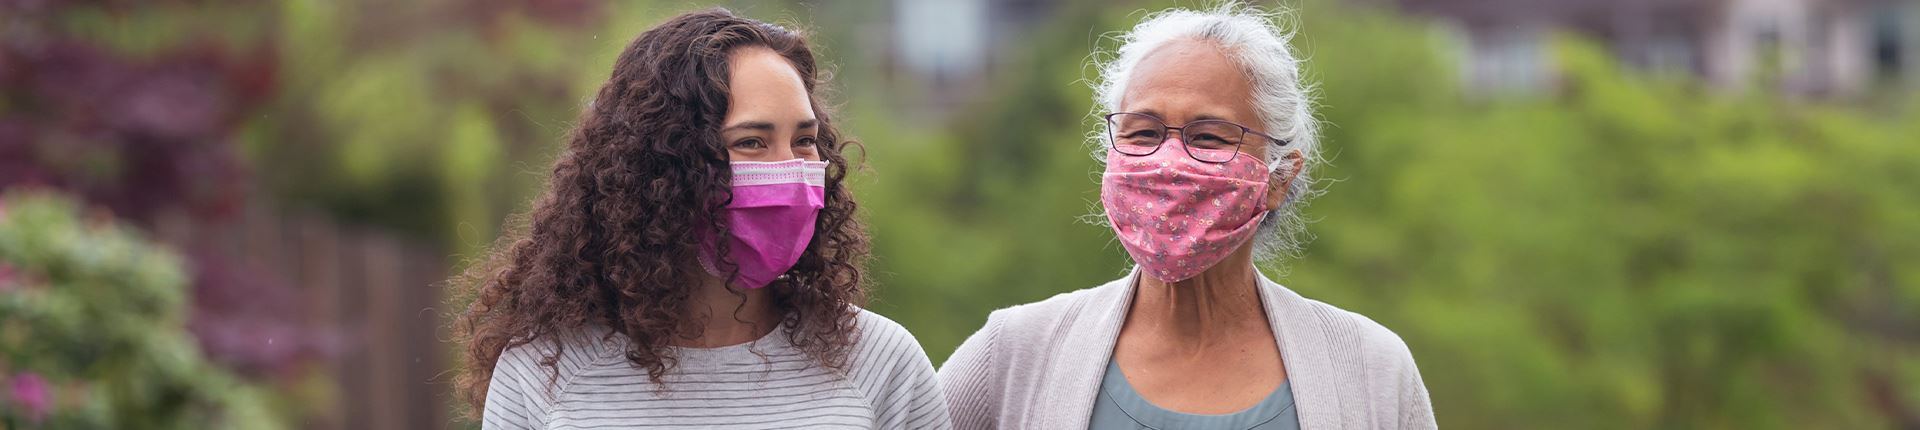 2 Women Wearing Masks